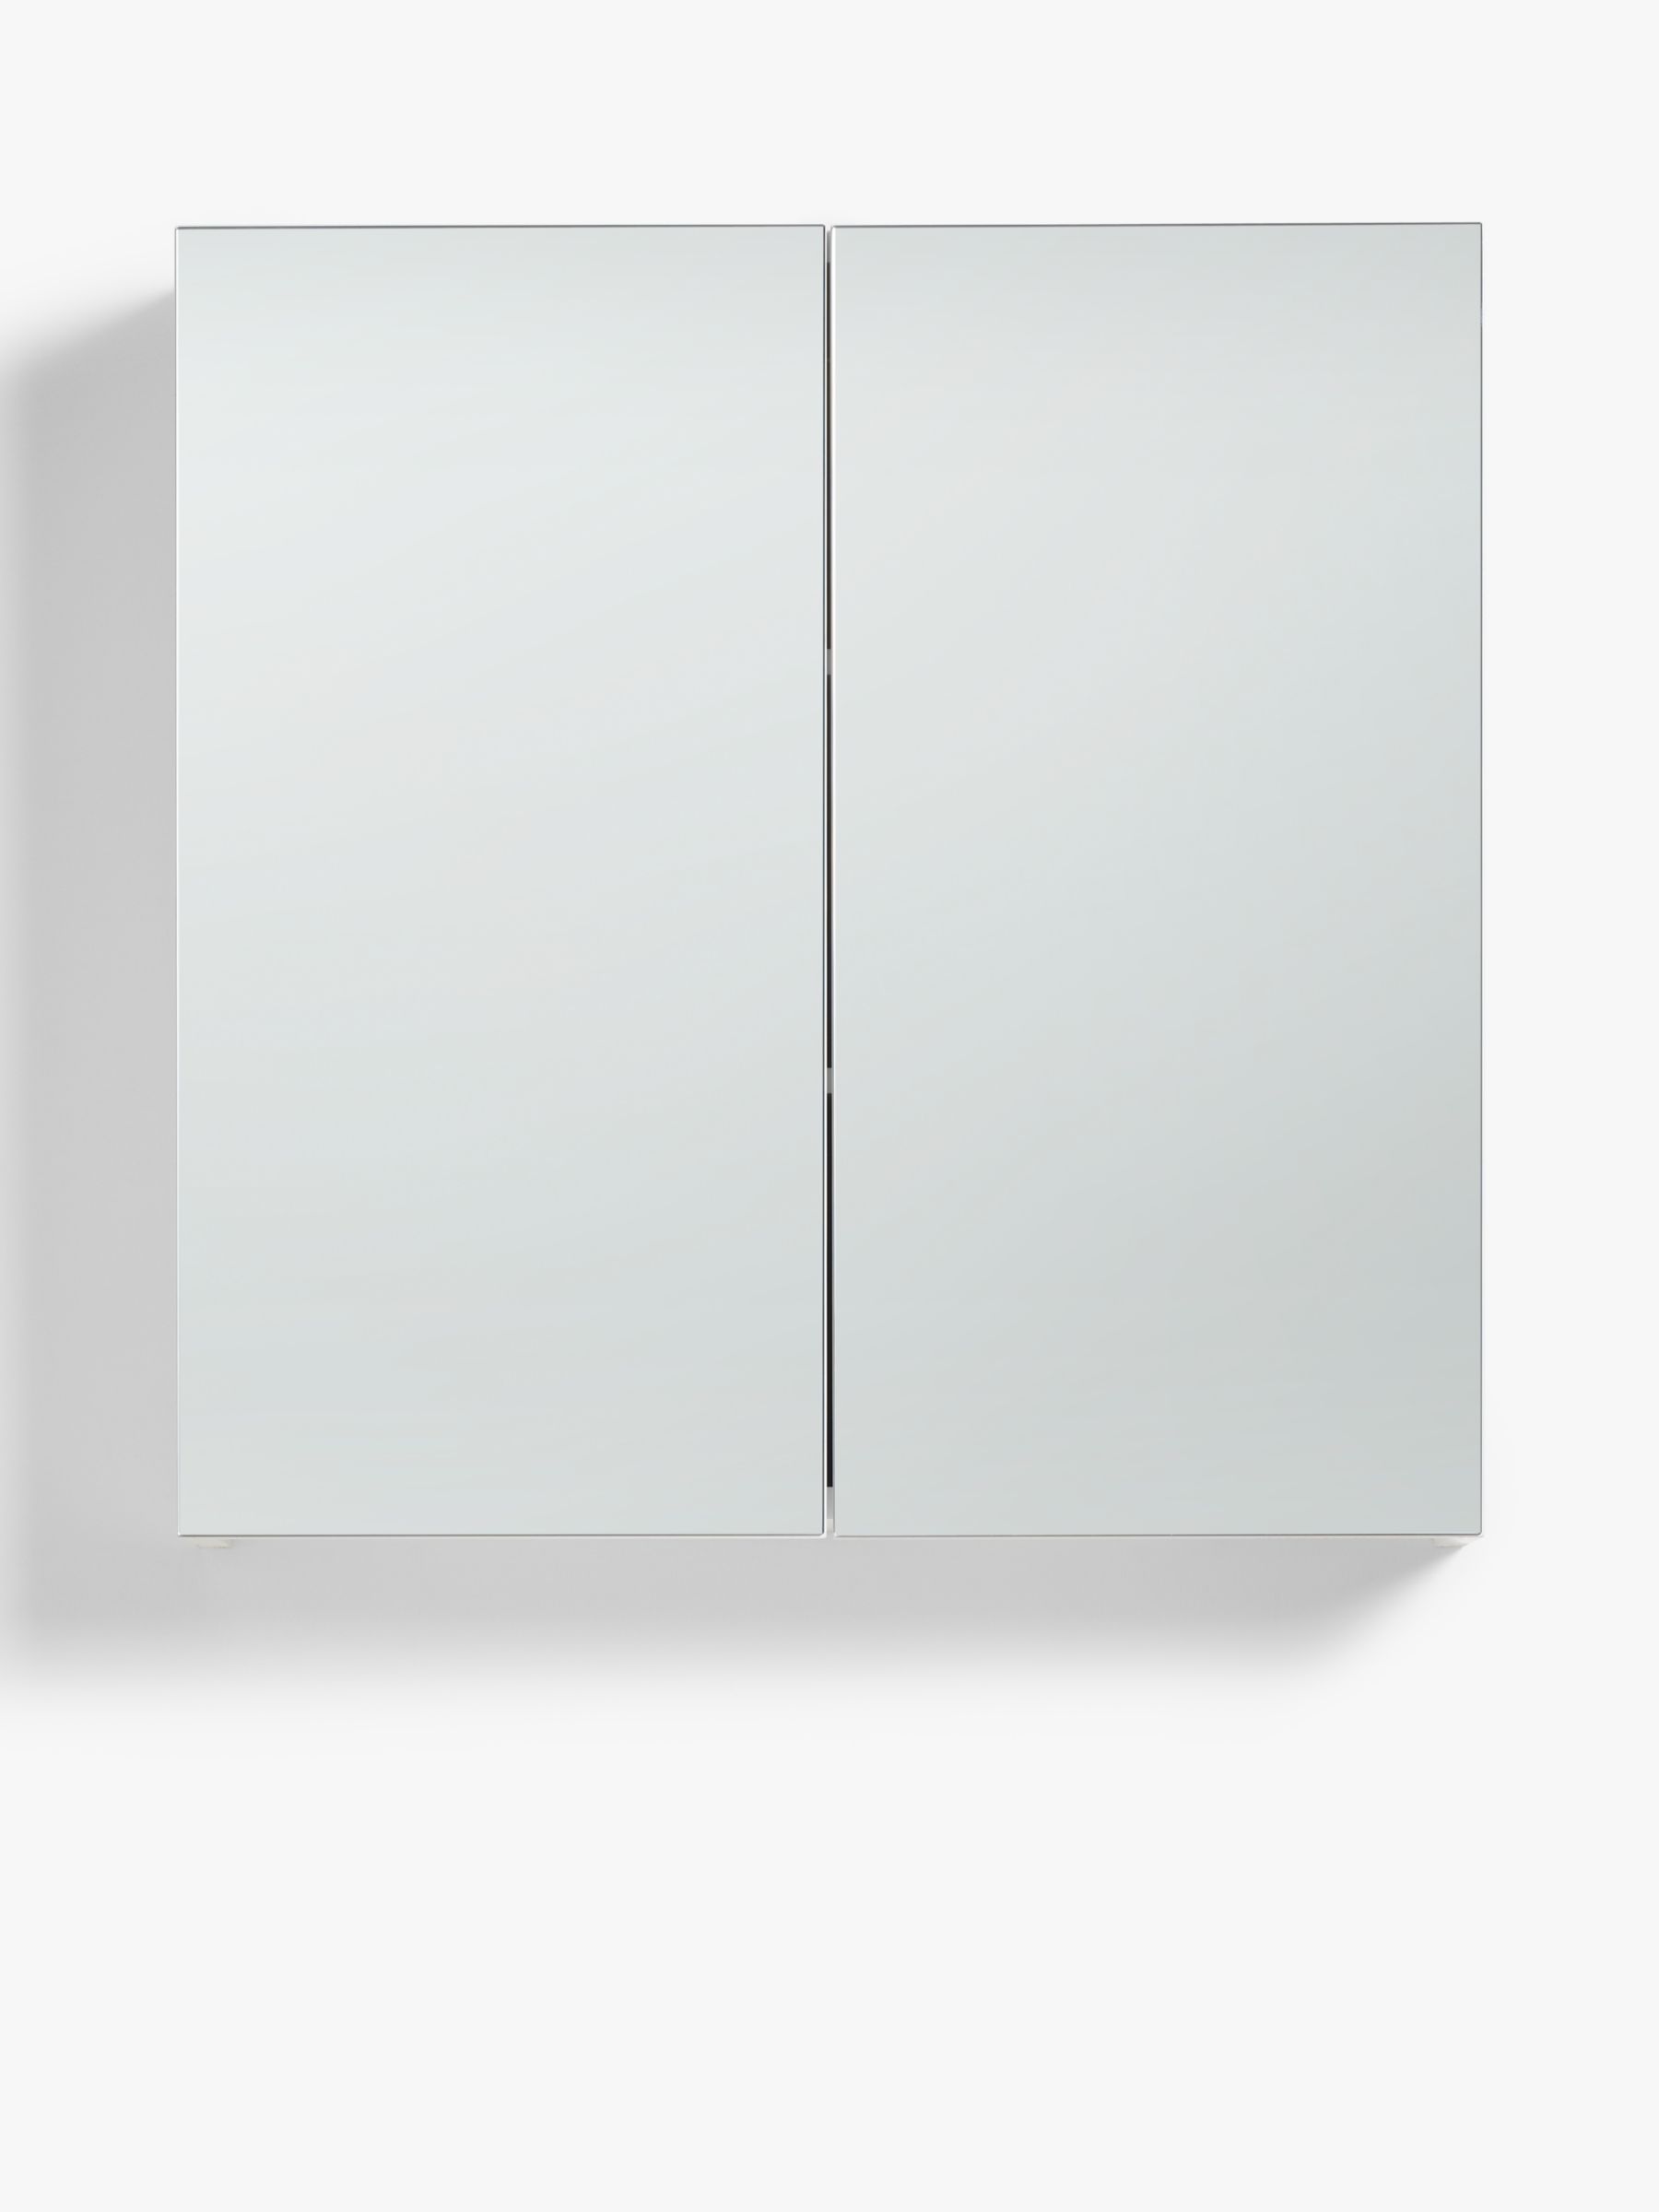 Photo of John lewis white gloss double mirrored bathroom cabinet